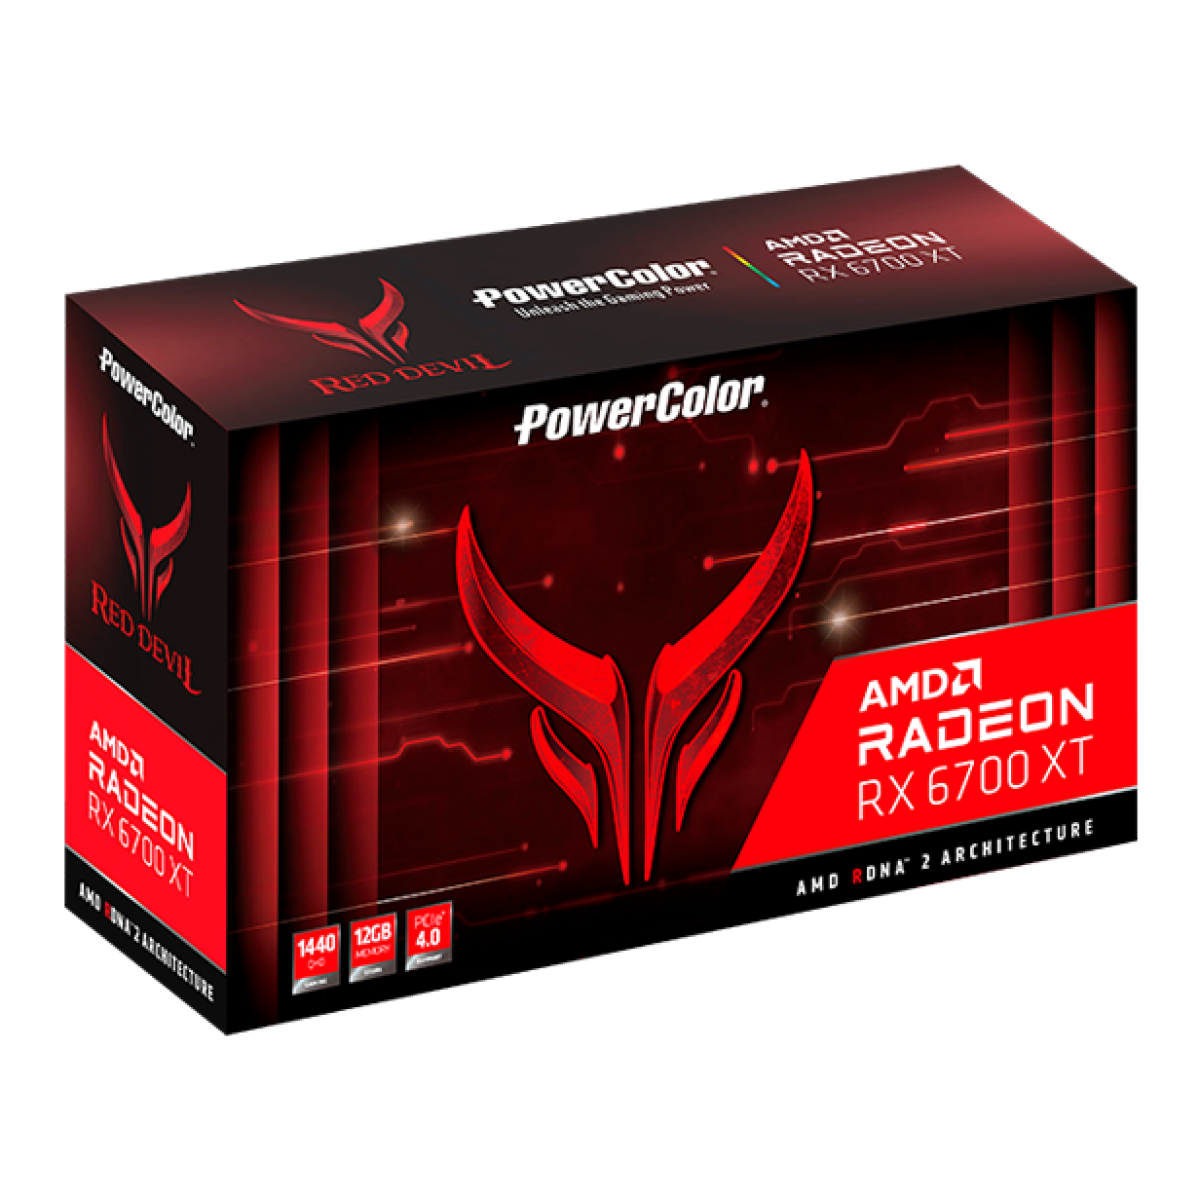 Placa de Vídeo PowerColor Red Devil Radeon RX 6700 XT, 12GB, GDDR6, FSR, Ray Tracing, AXRX 6700XT 12GBD6-3DHE/OC